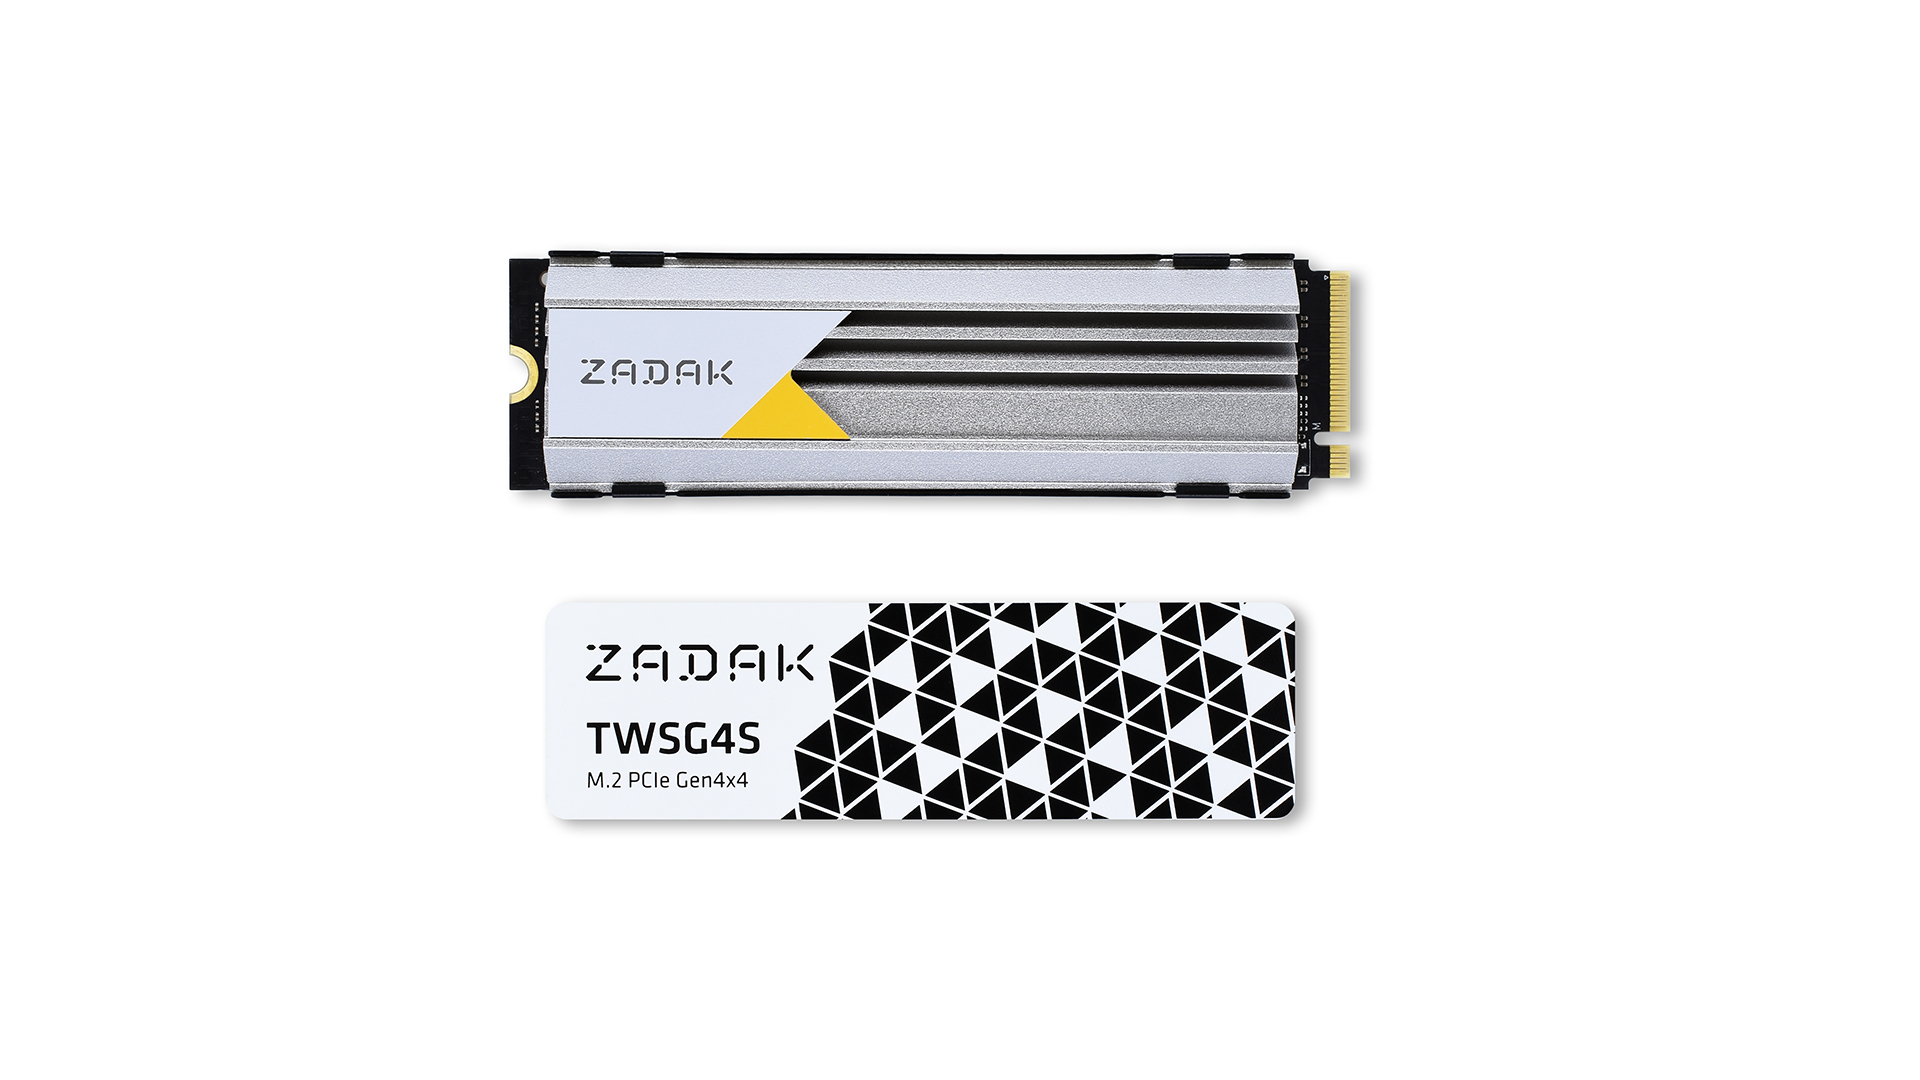 M.2 PCIe Gen4 x4 SSD